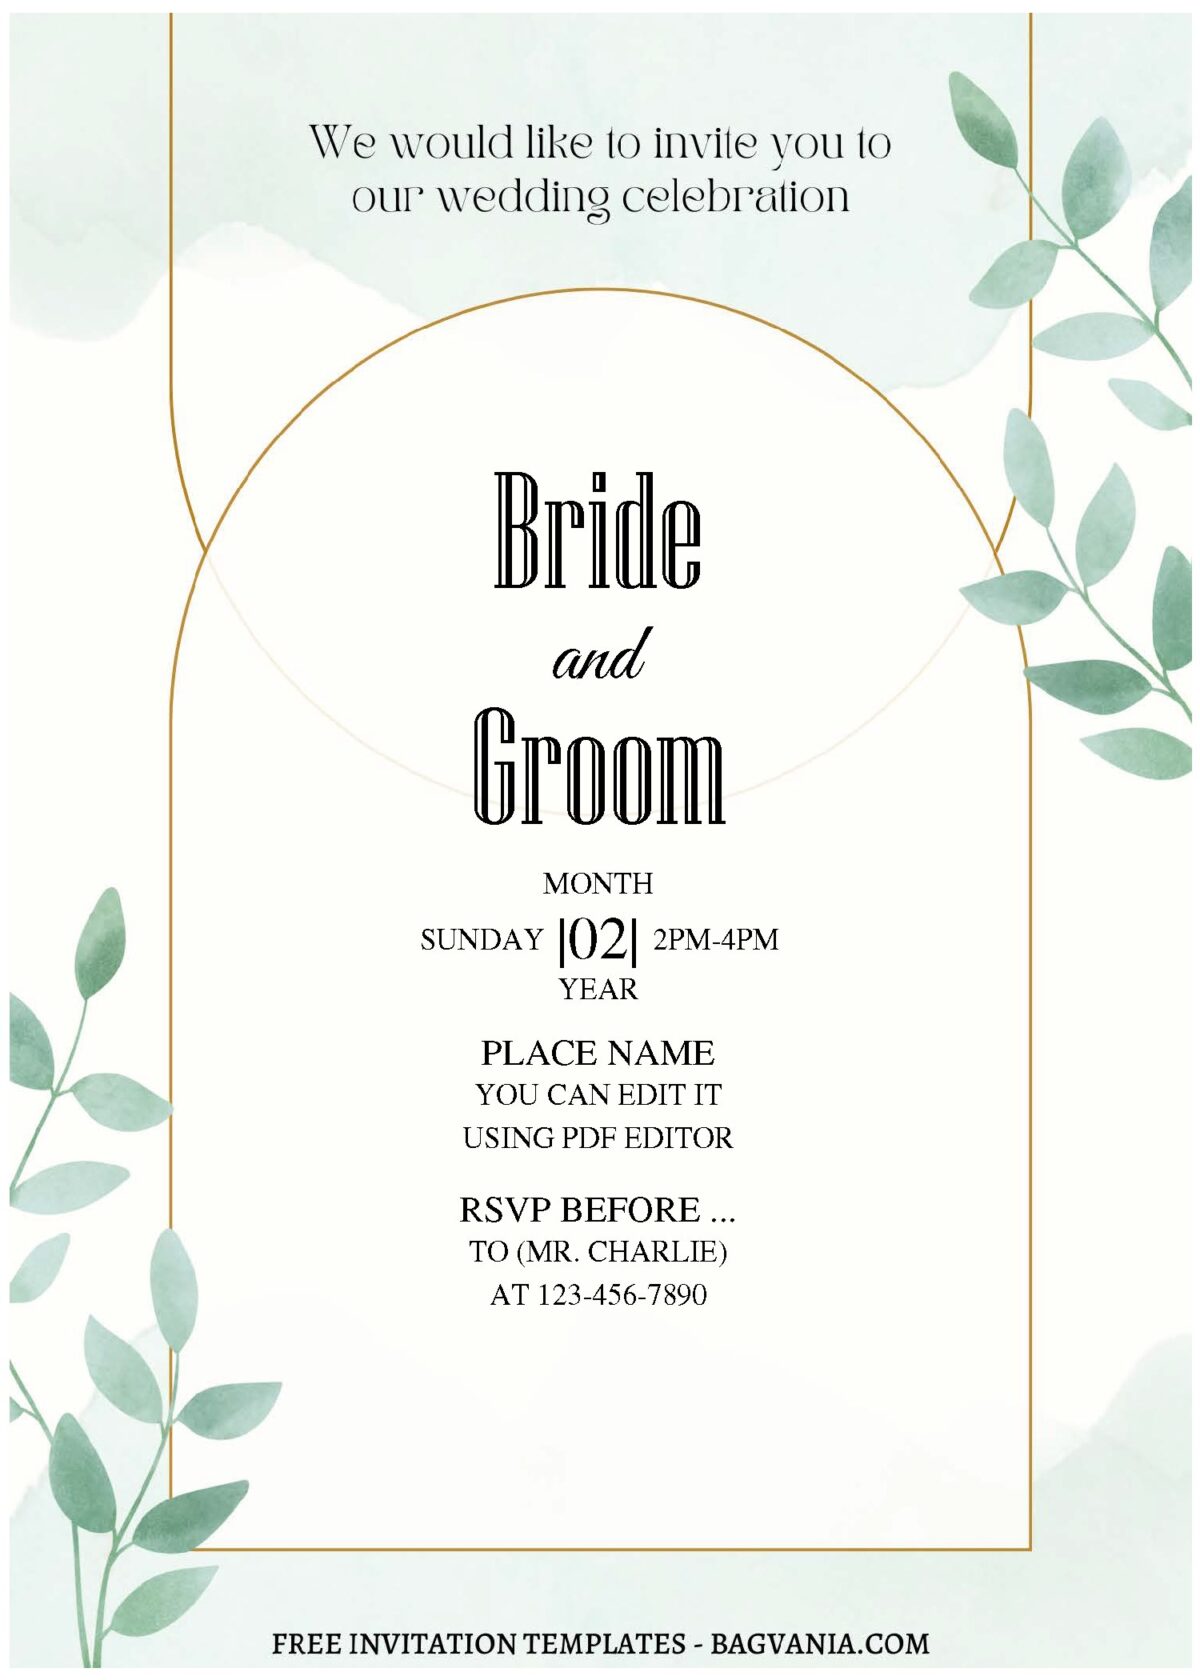 (Free Editable PDF) Modern Glam Greenery Wedding Invitation Templates  with minimalist arch frames